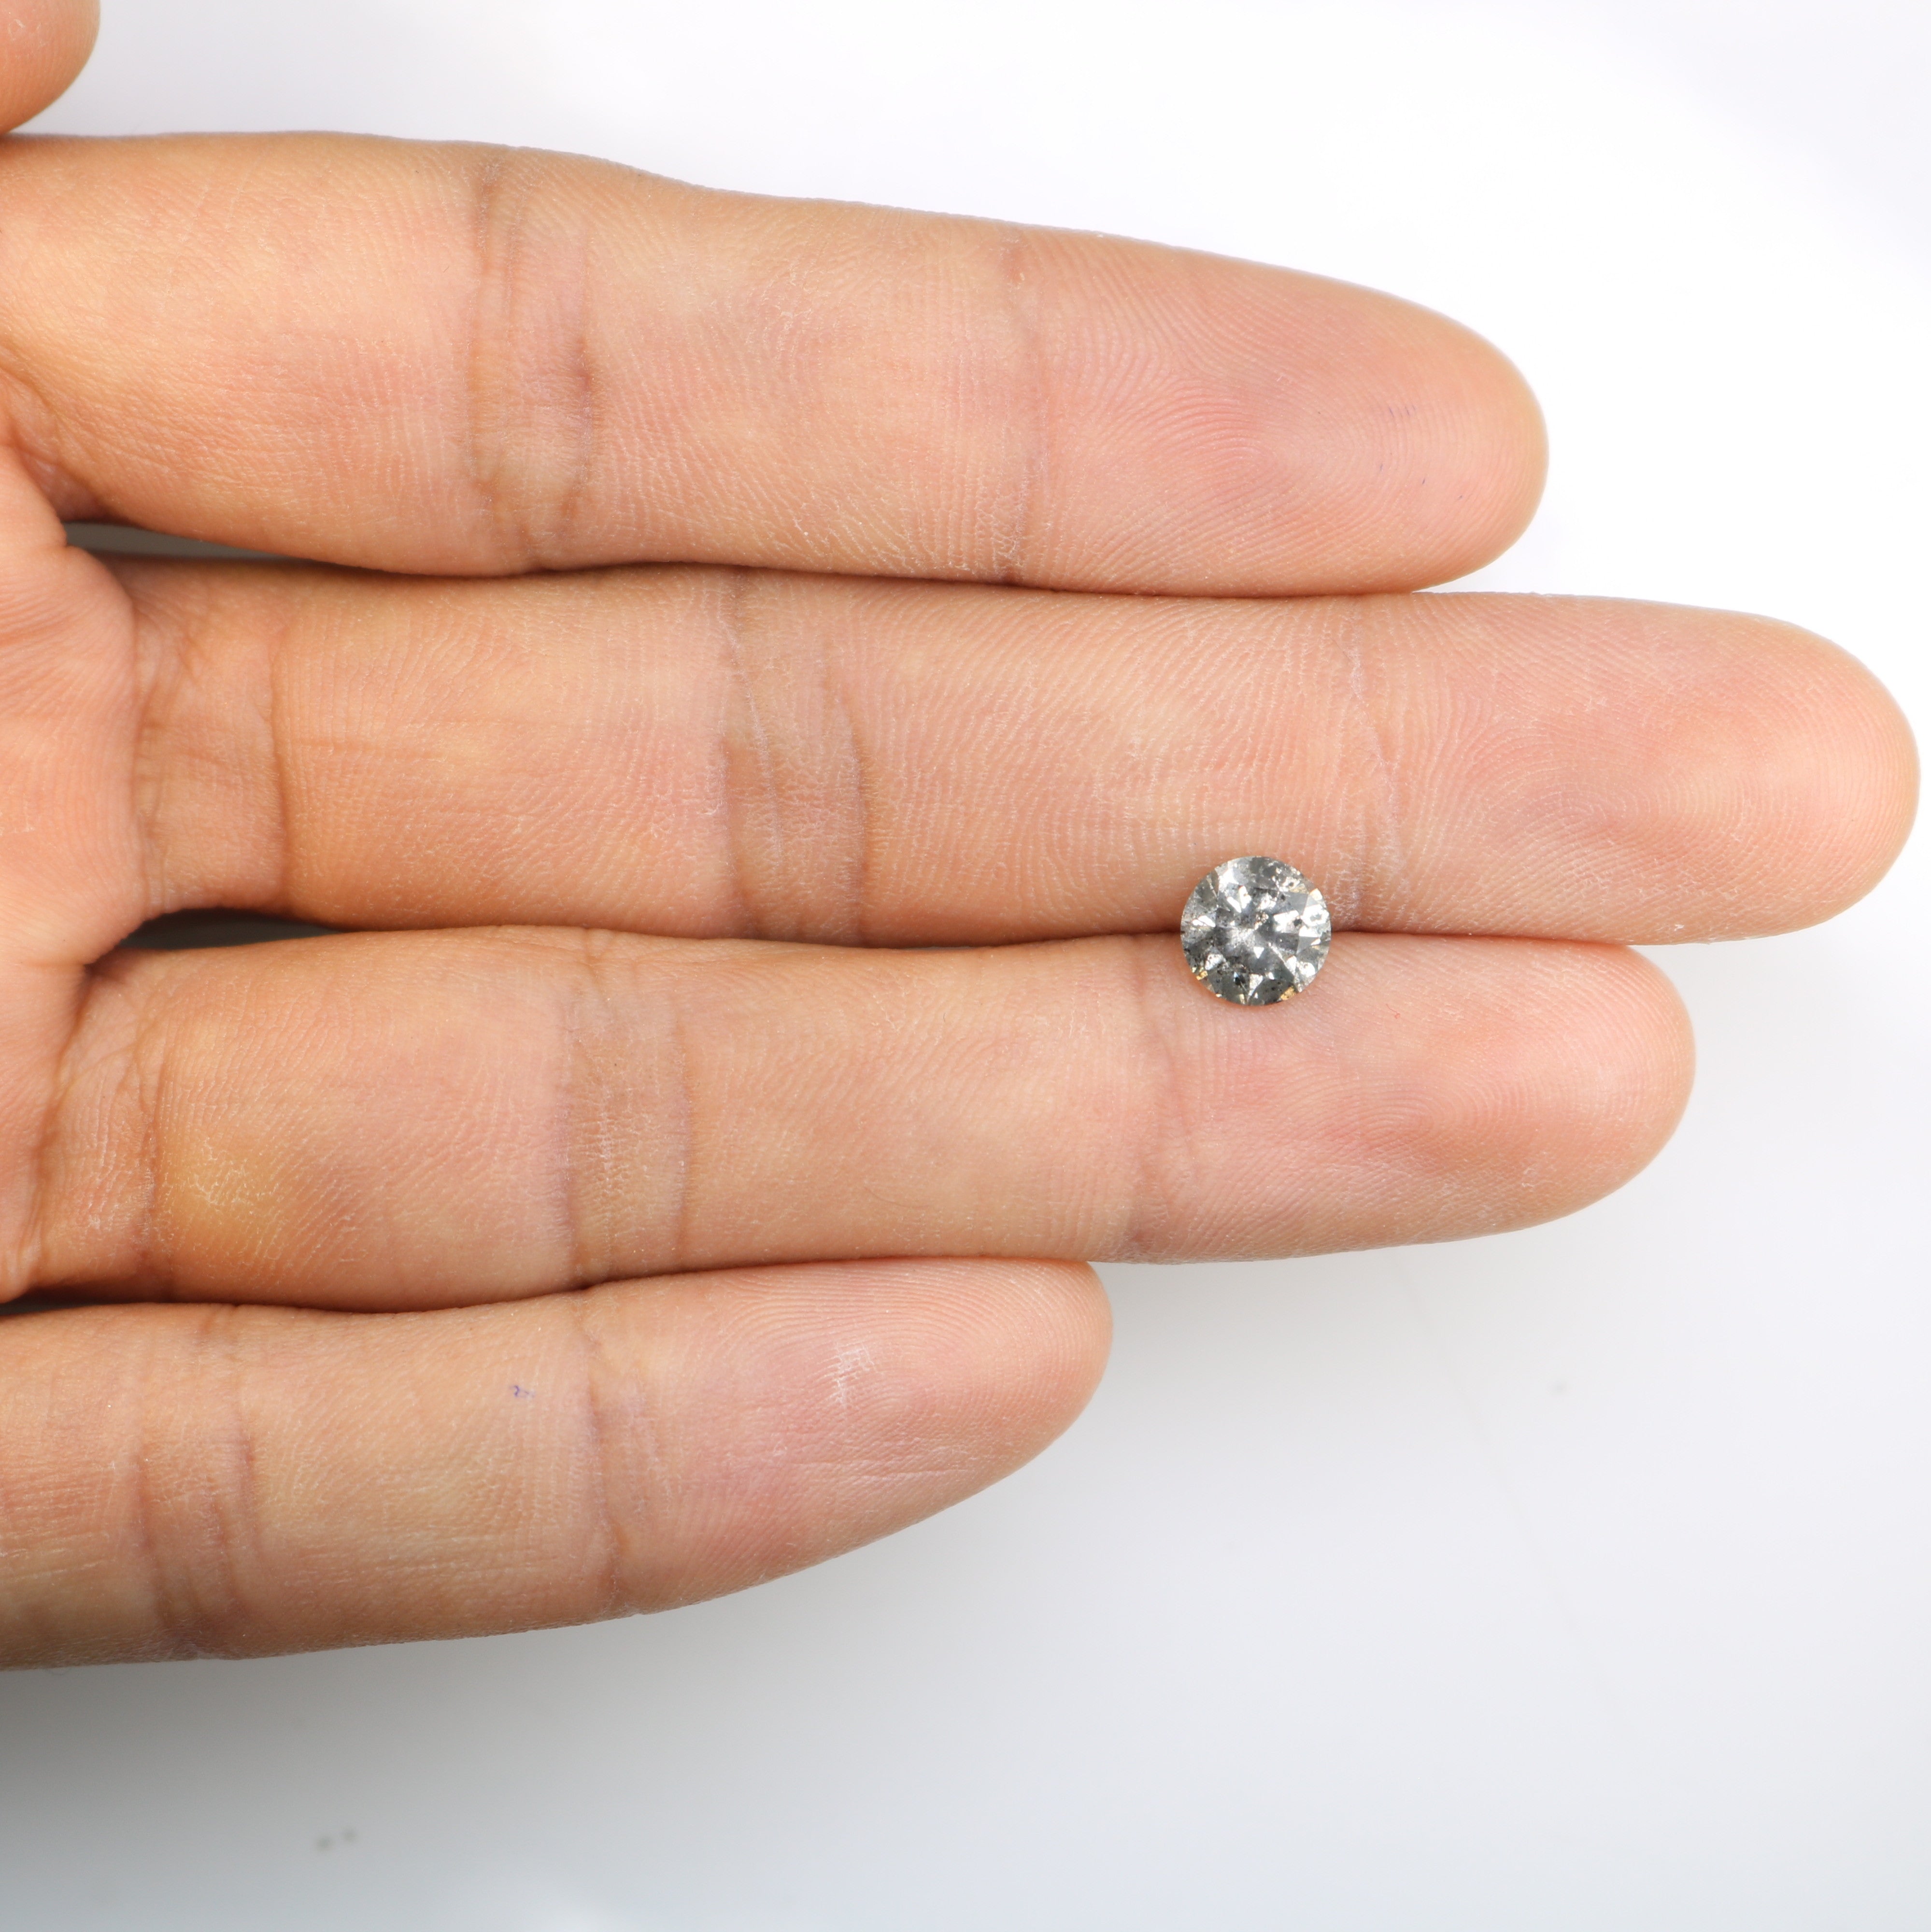 1.51 Carat Salt And Pepper Loose Round Brilliant Cut Diamond For Wedding Ring